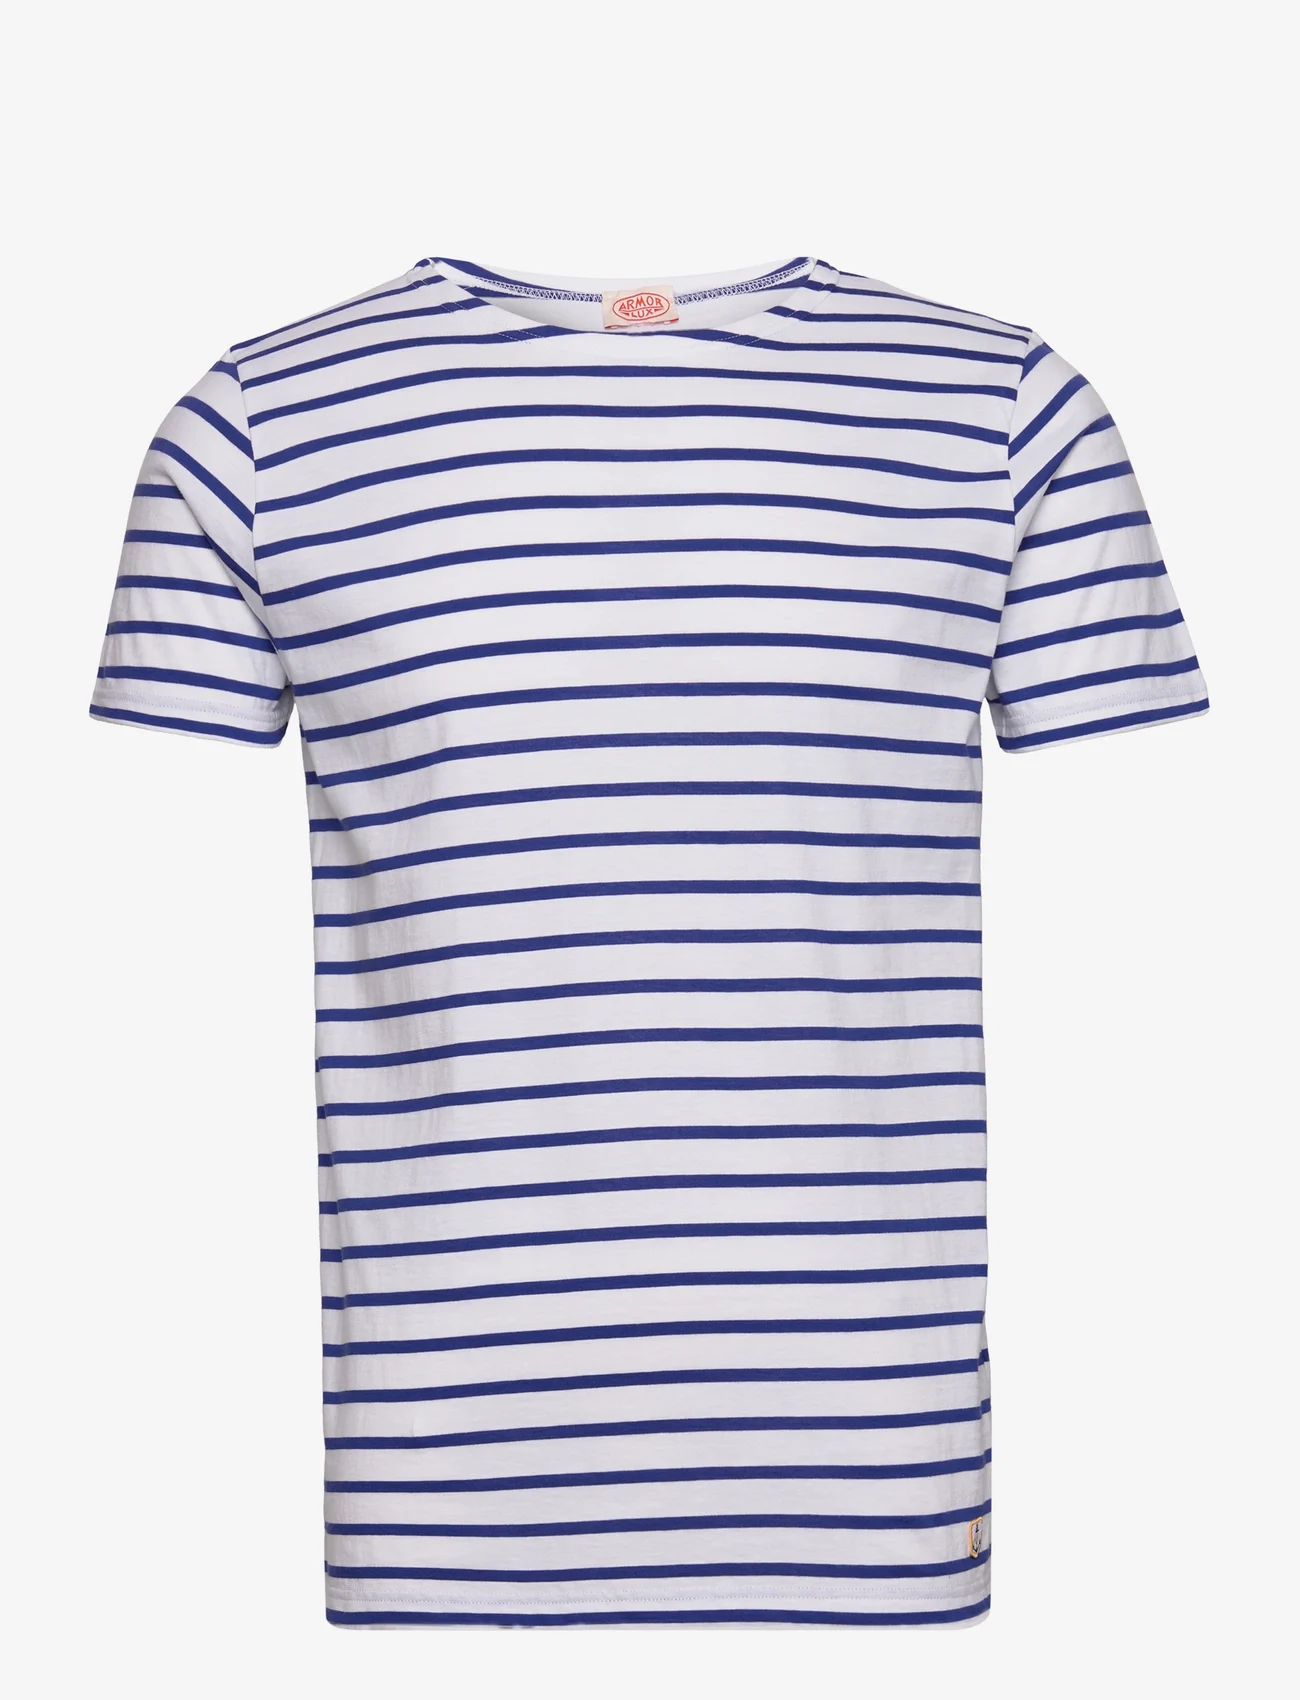 Armor Lux - Breton Striped Shirt Héritage - kortærmede t-shirts - blanc/etoile - 0